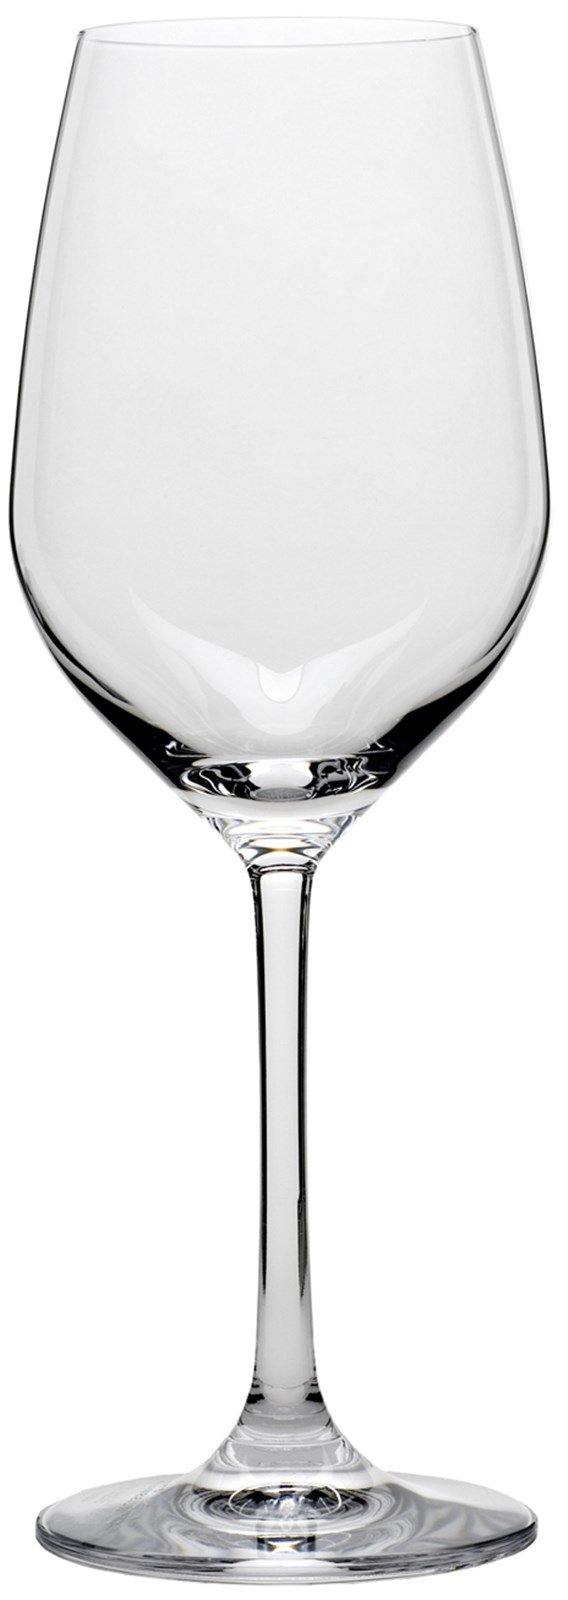 Grand Cuvée Weissweinglas /-/ 1dl geeicht - MyLiving24